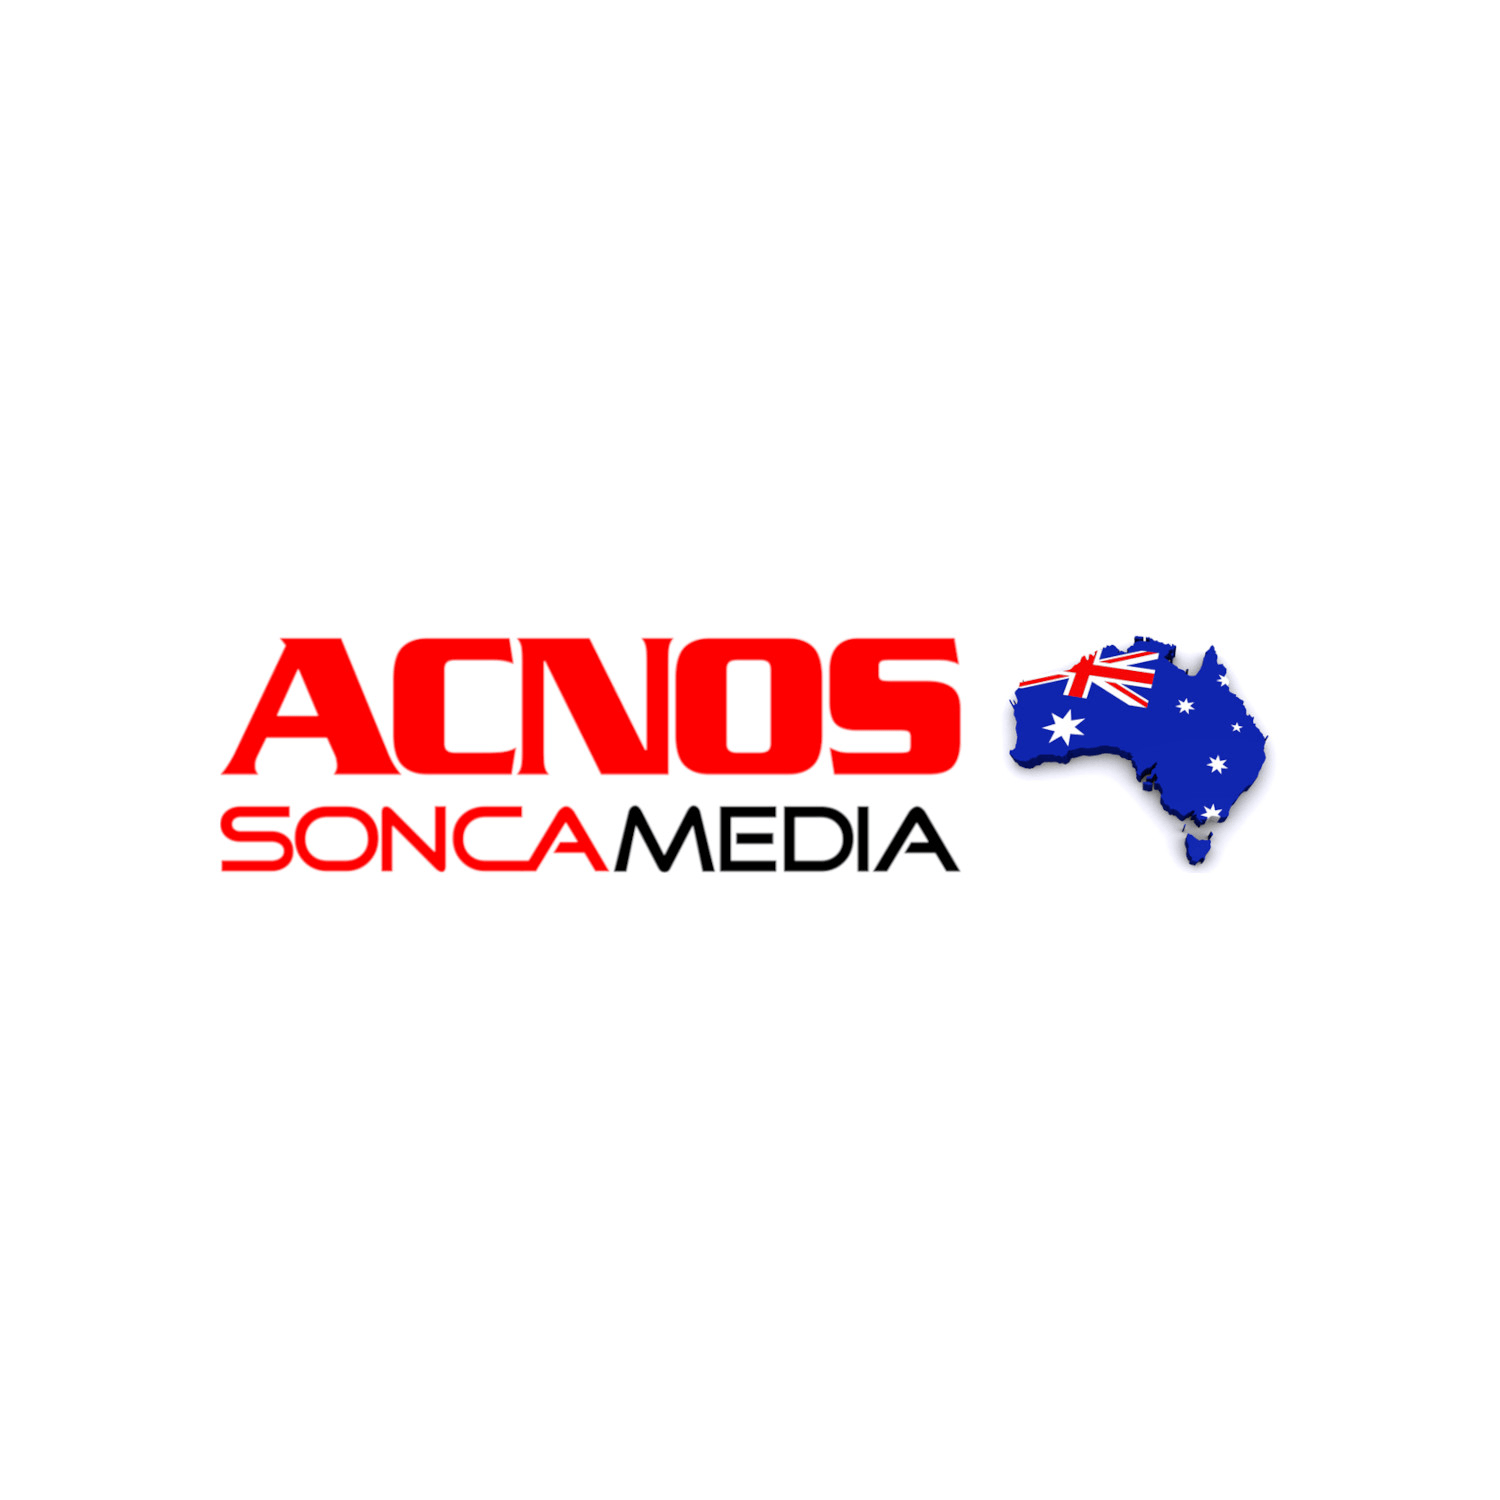 ACNOS SoncaMedia Karaoke Solutions - Karaoke Home Entertainment